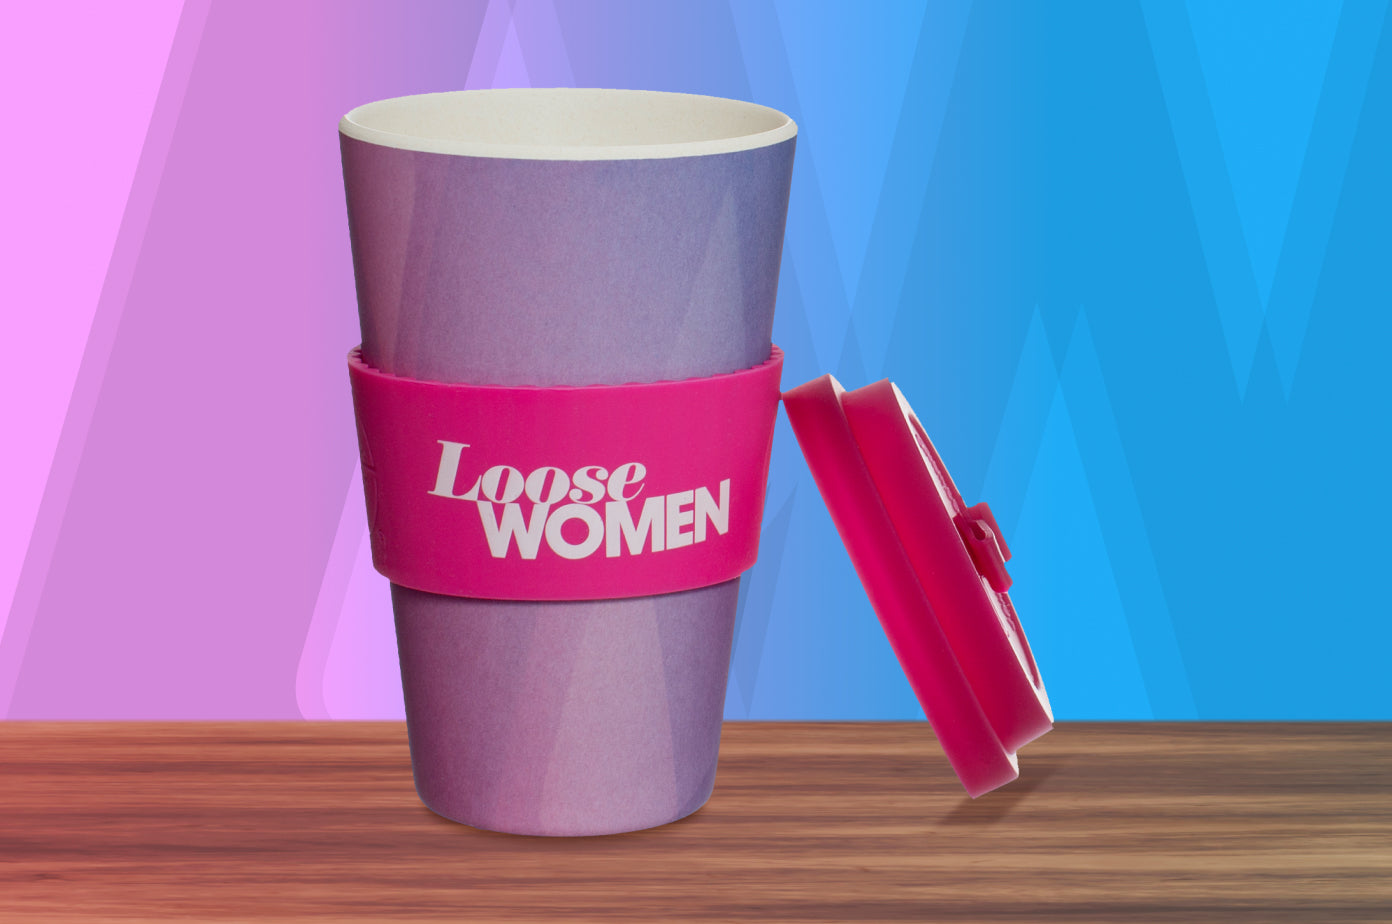 Loose Women Reusable Cup